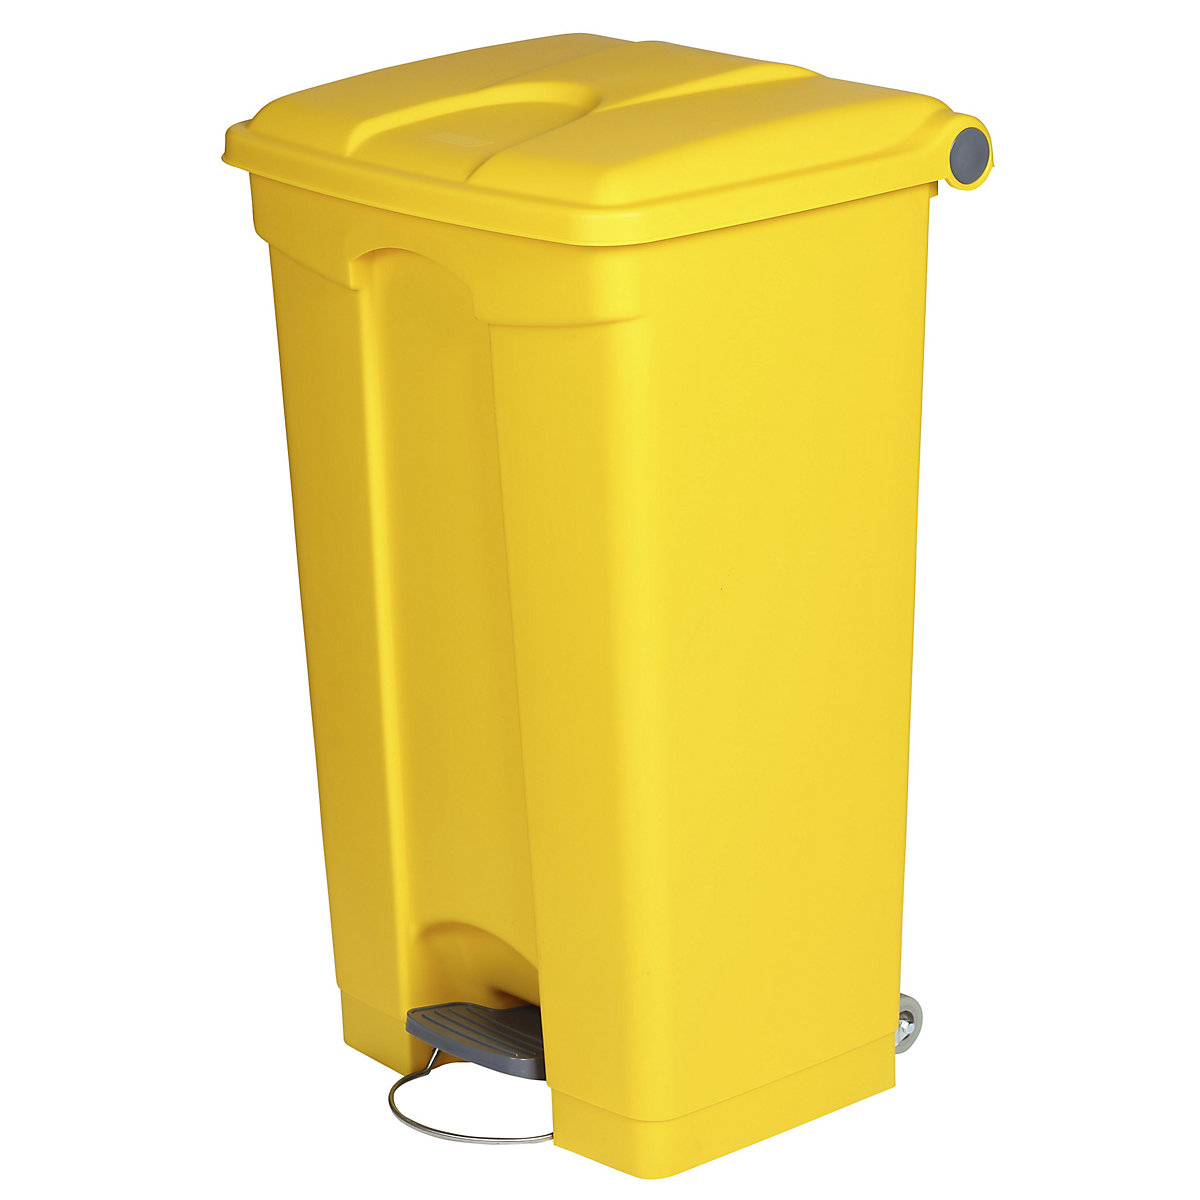 EUROKRAFTbasic – Pedal waste collector, capacity 90 l, WxHxD 505 x 790 x 410 mm, yellow